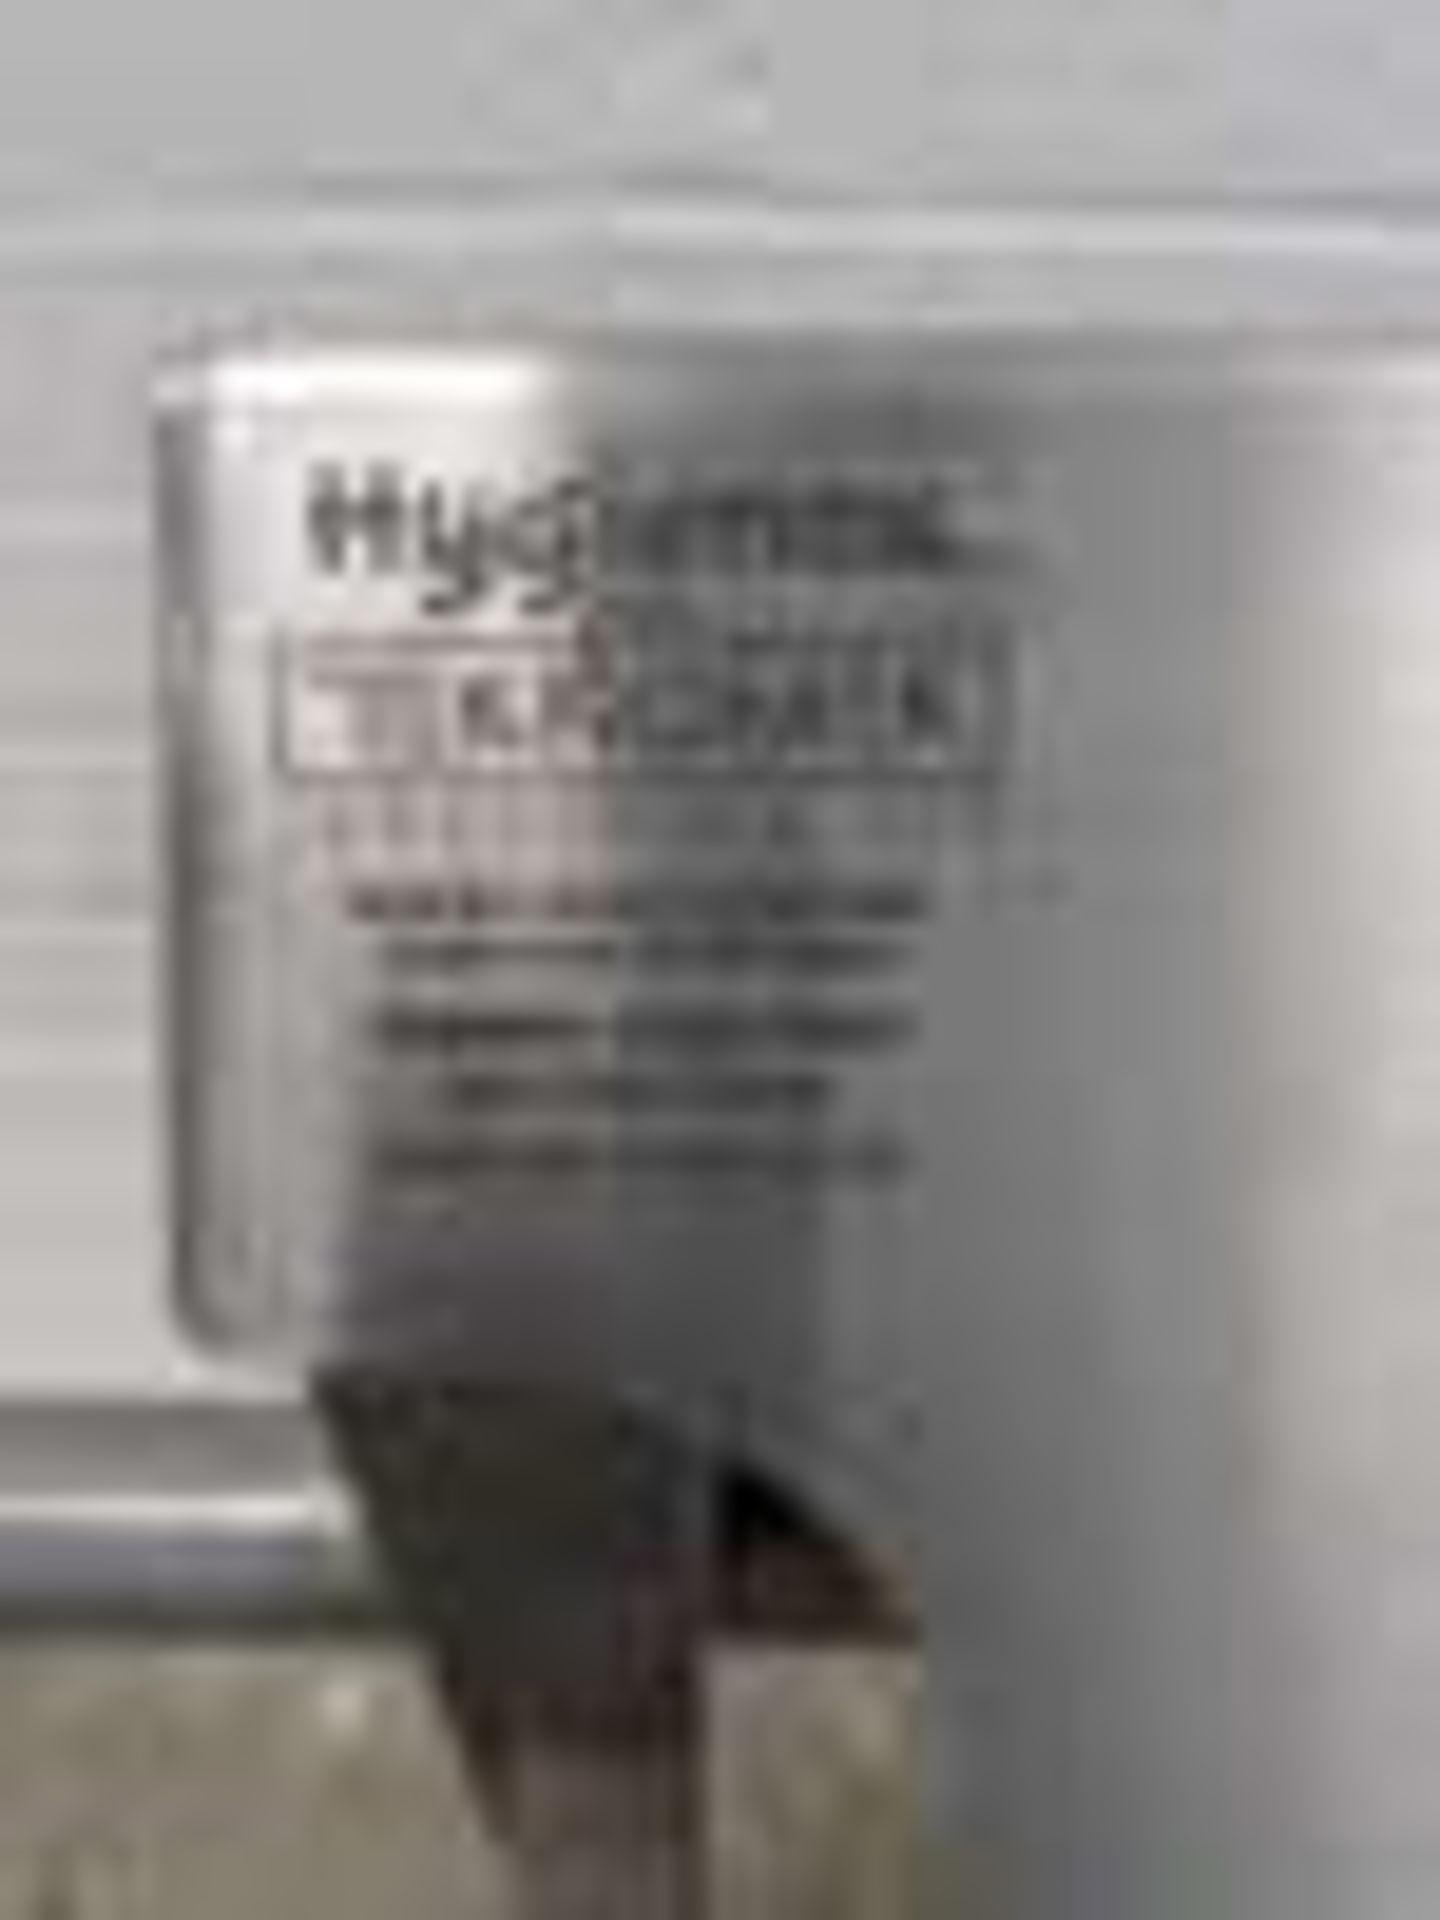 Hygienox Teknomek - Image 5 of 5